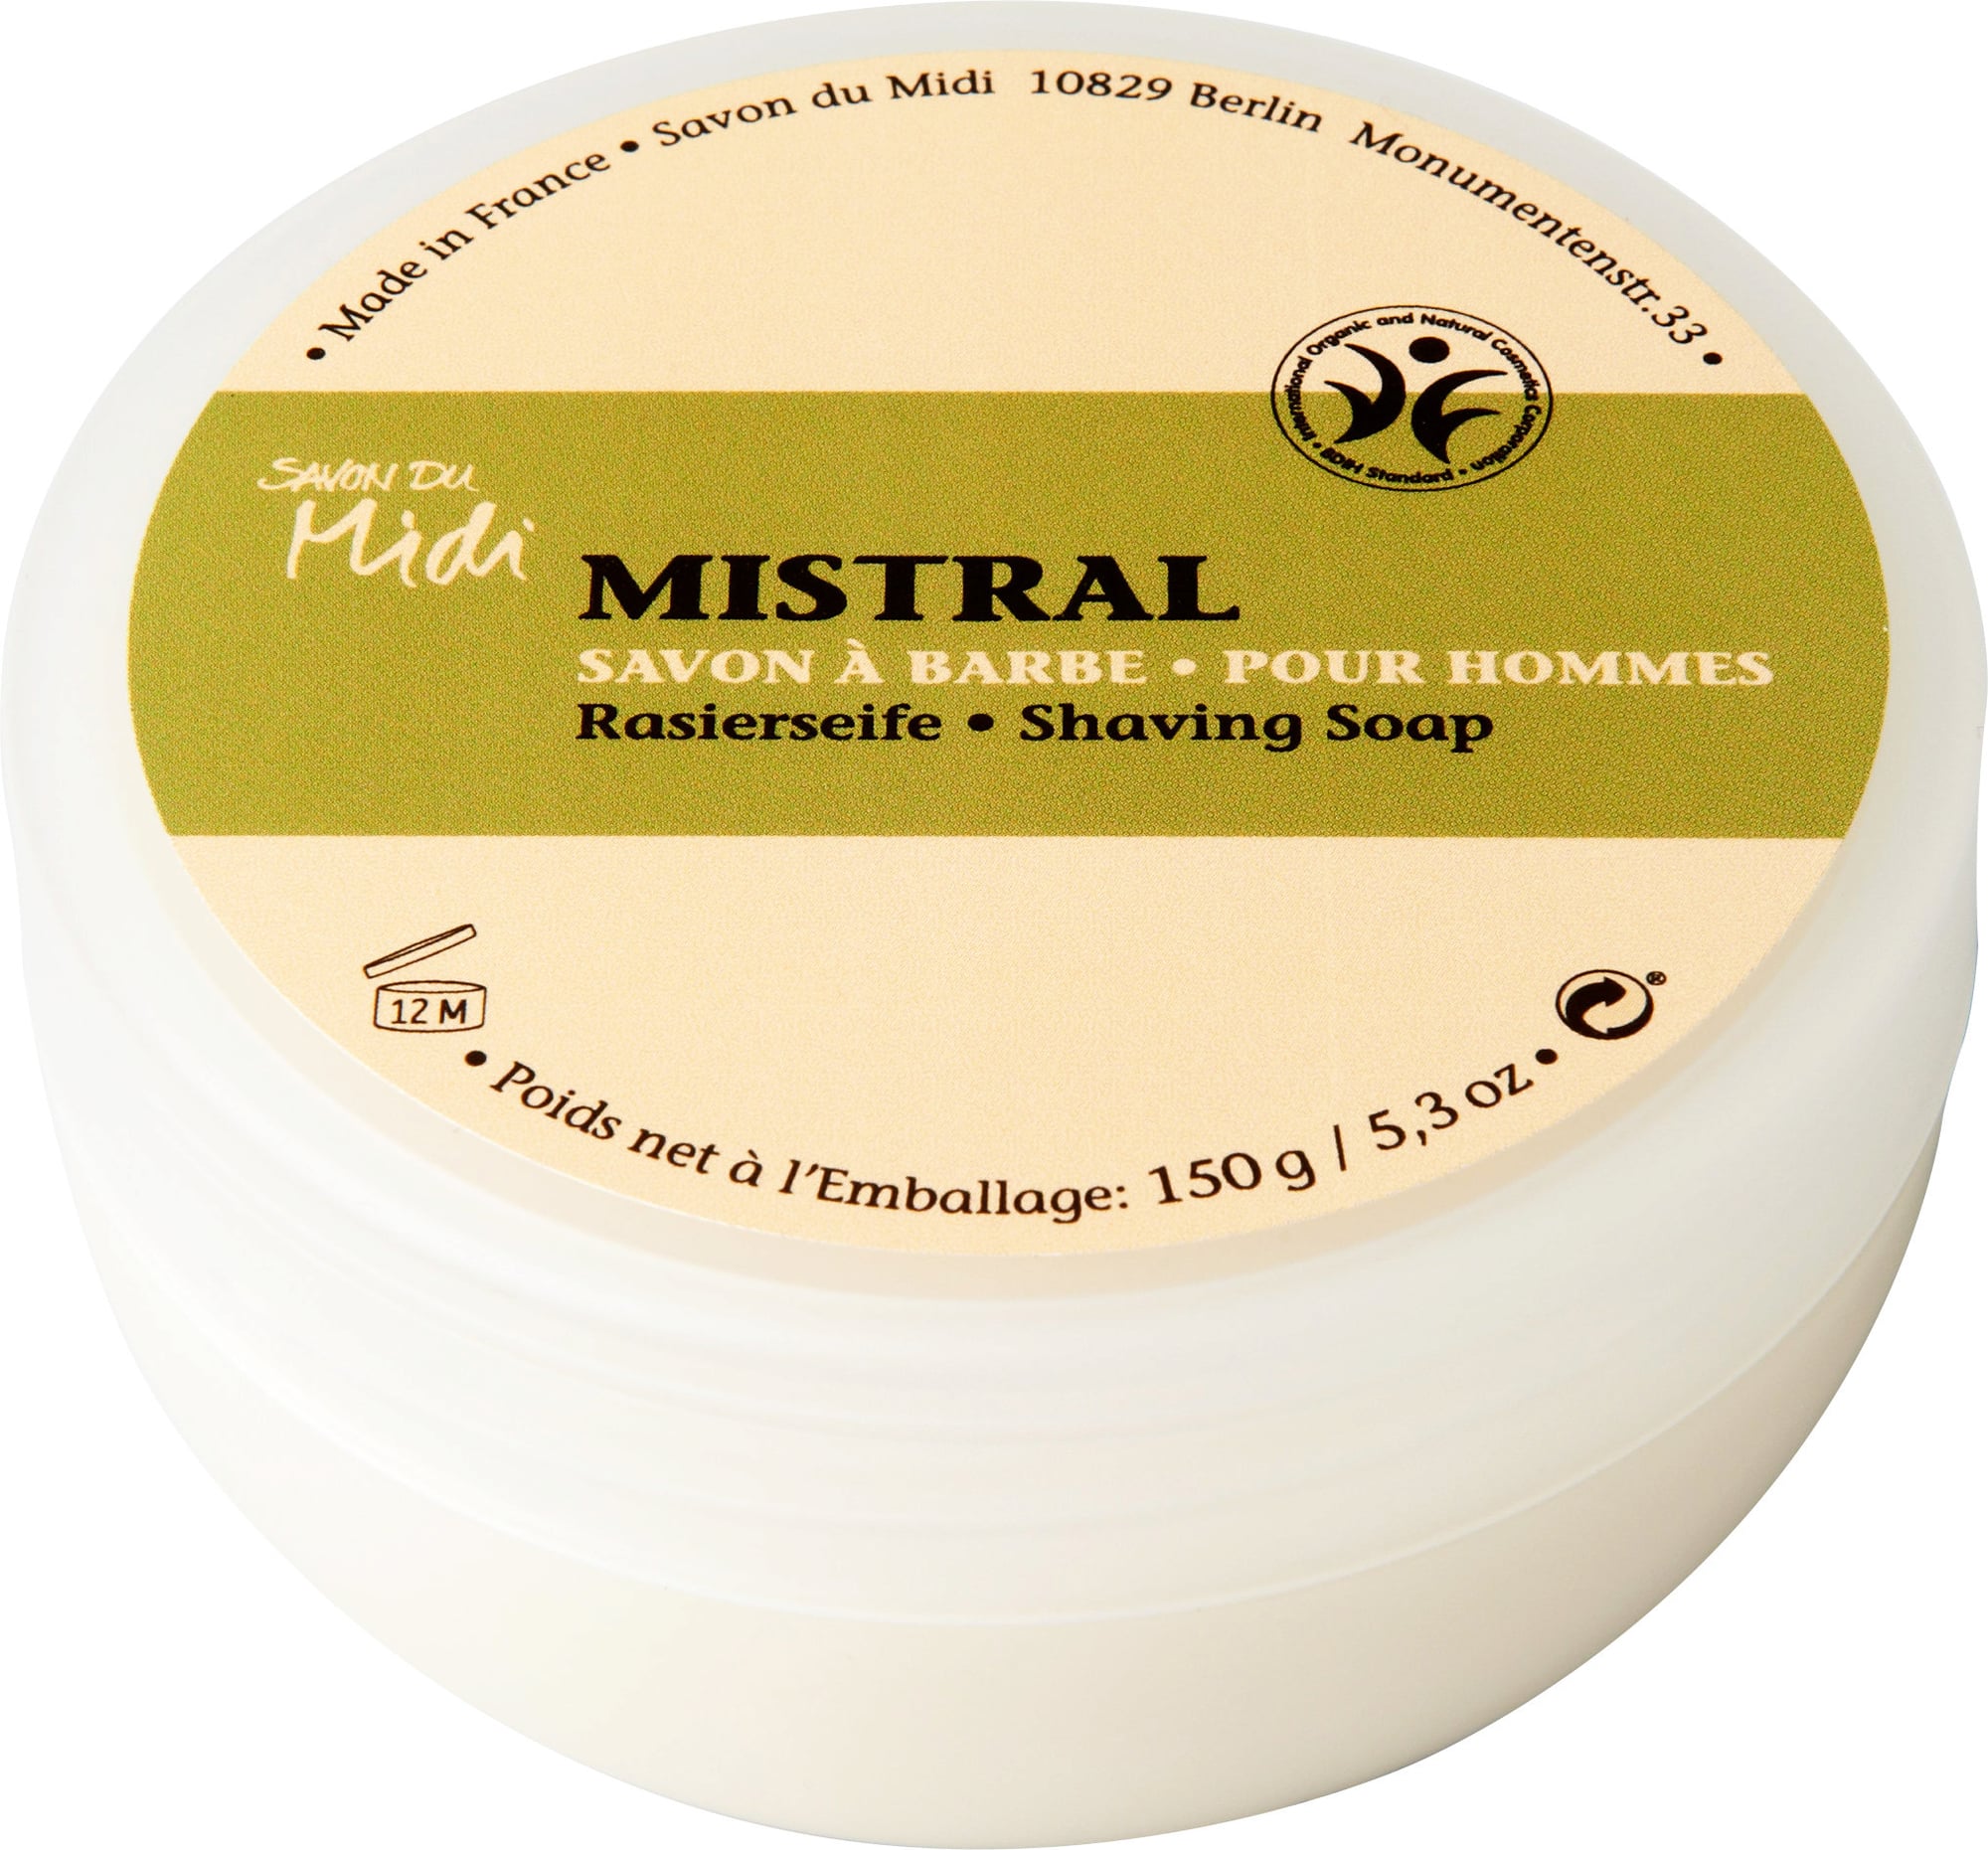 Savon du Midi Midi Shaving Soap - Mistral